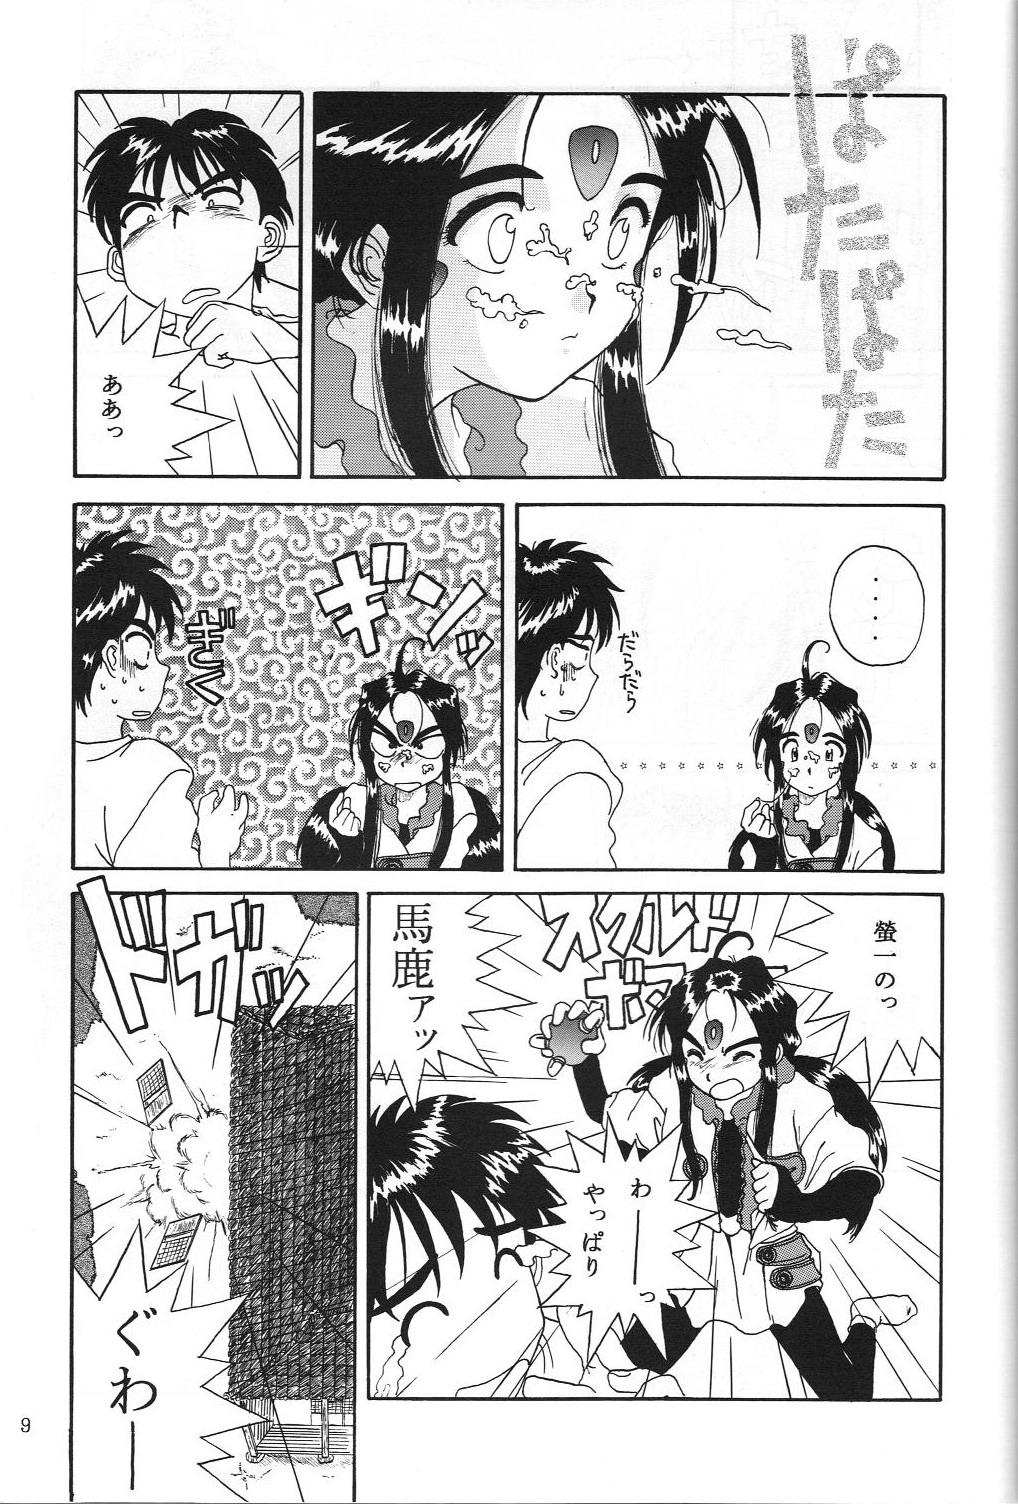 Instagram THE SECRET OF Chimatsuriya Vol. 5 - Ah my goddess Publico - Page 8